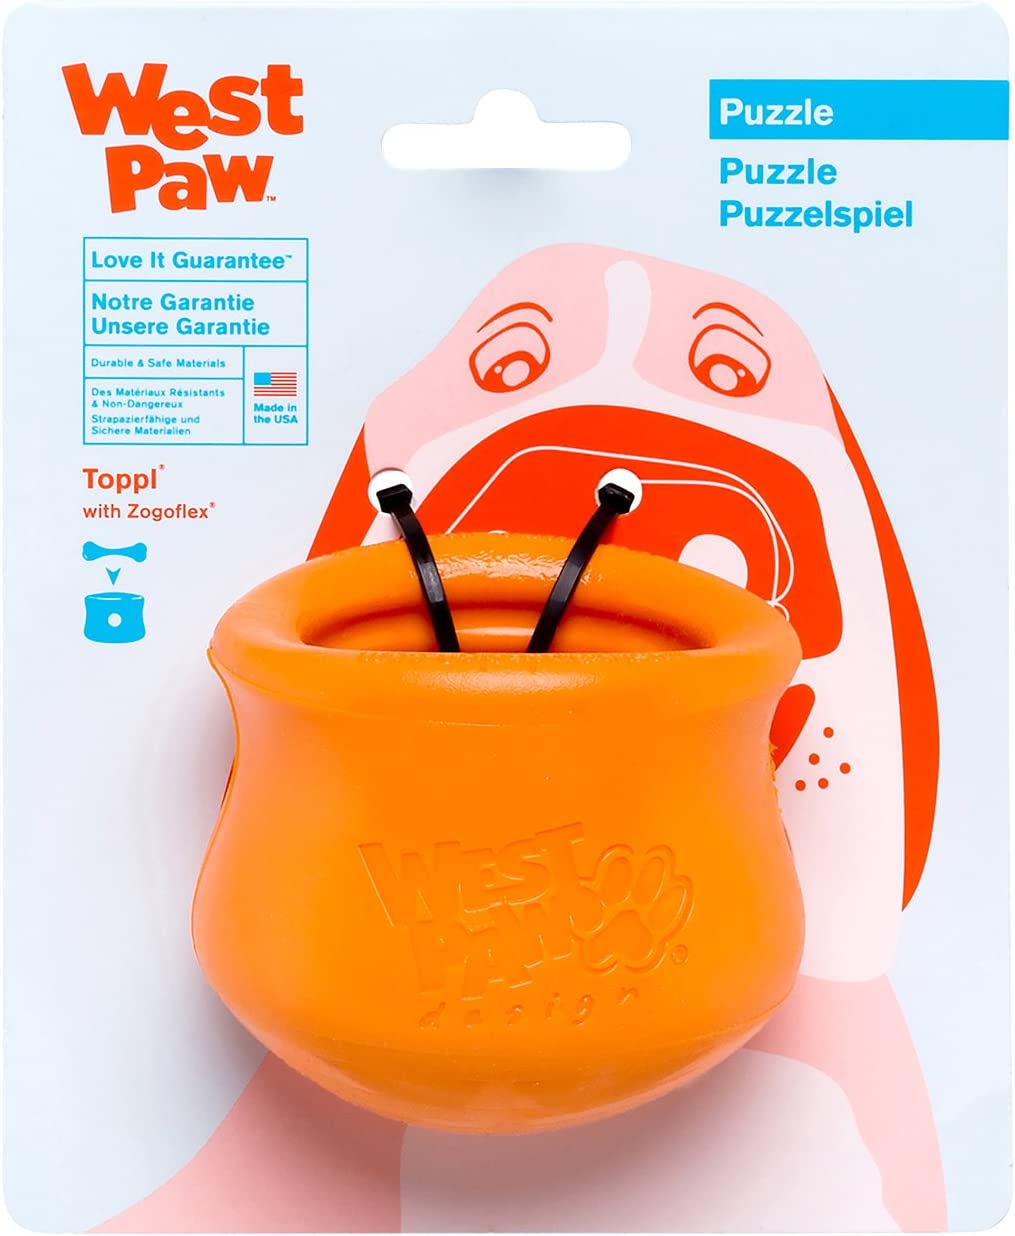 West Paw Zogoflex Toppl Treat Dispensing Dog Toy Puzzle Small Orange